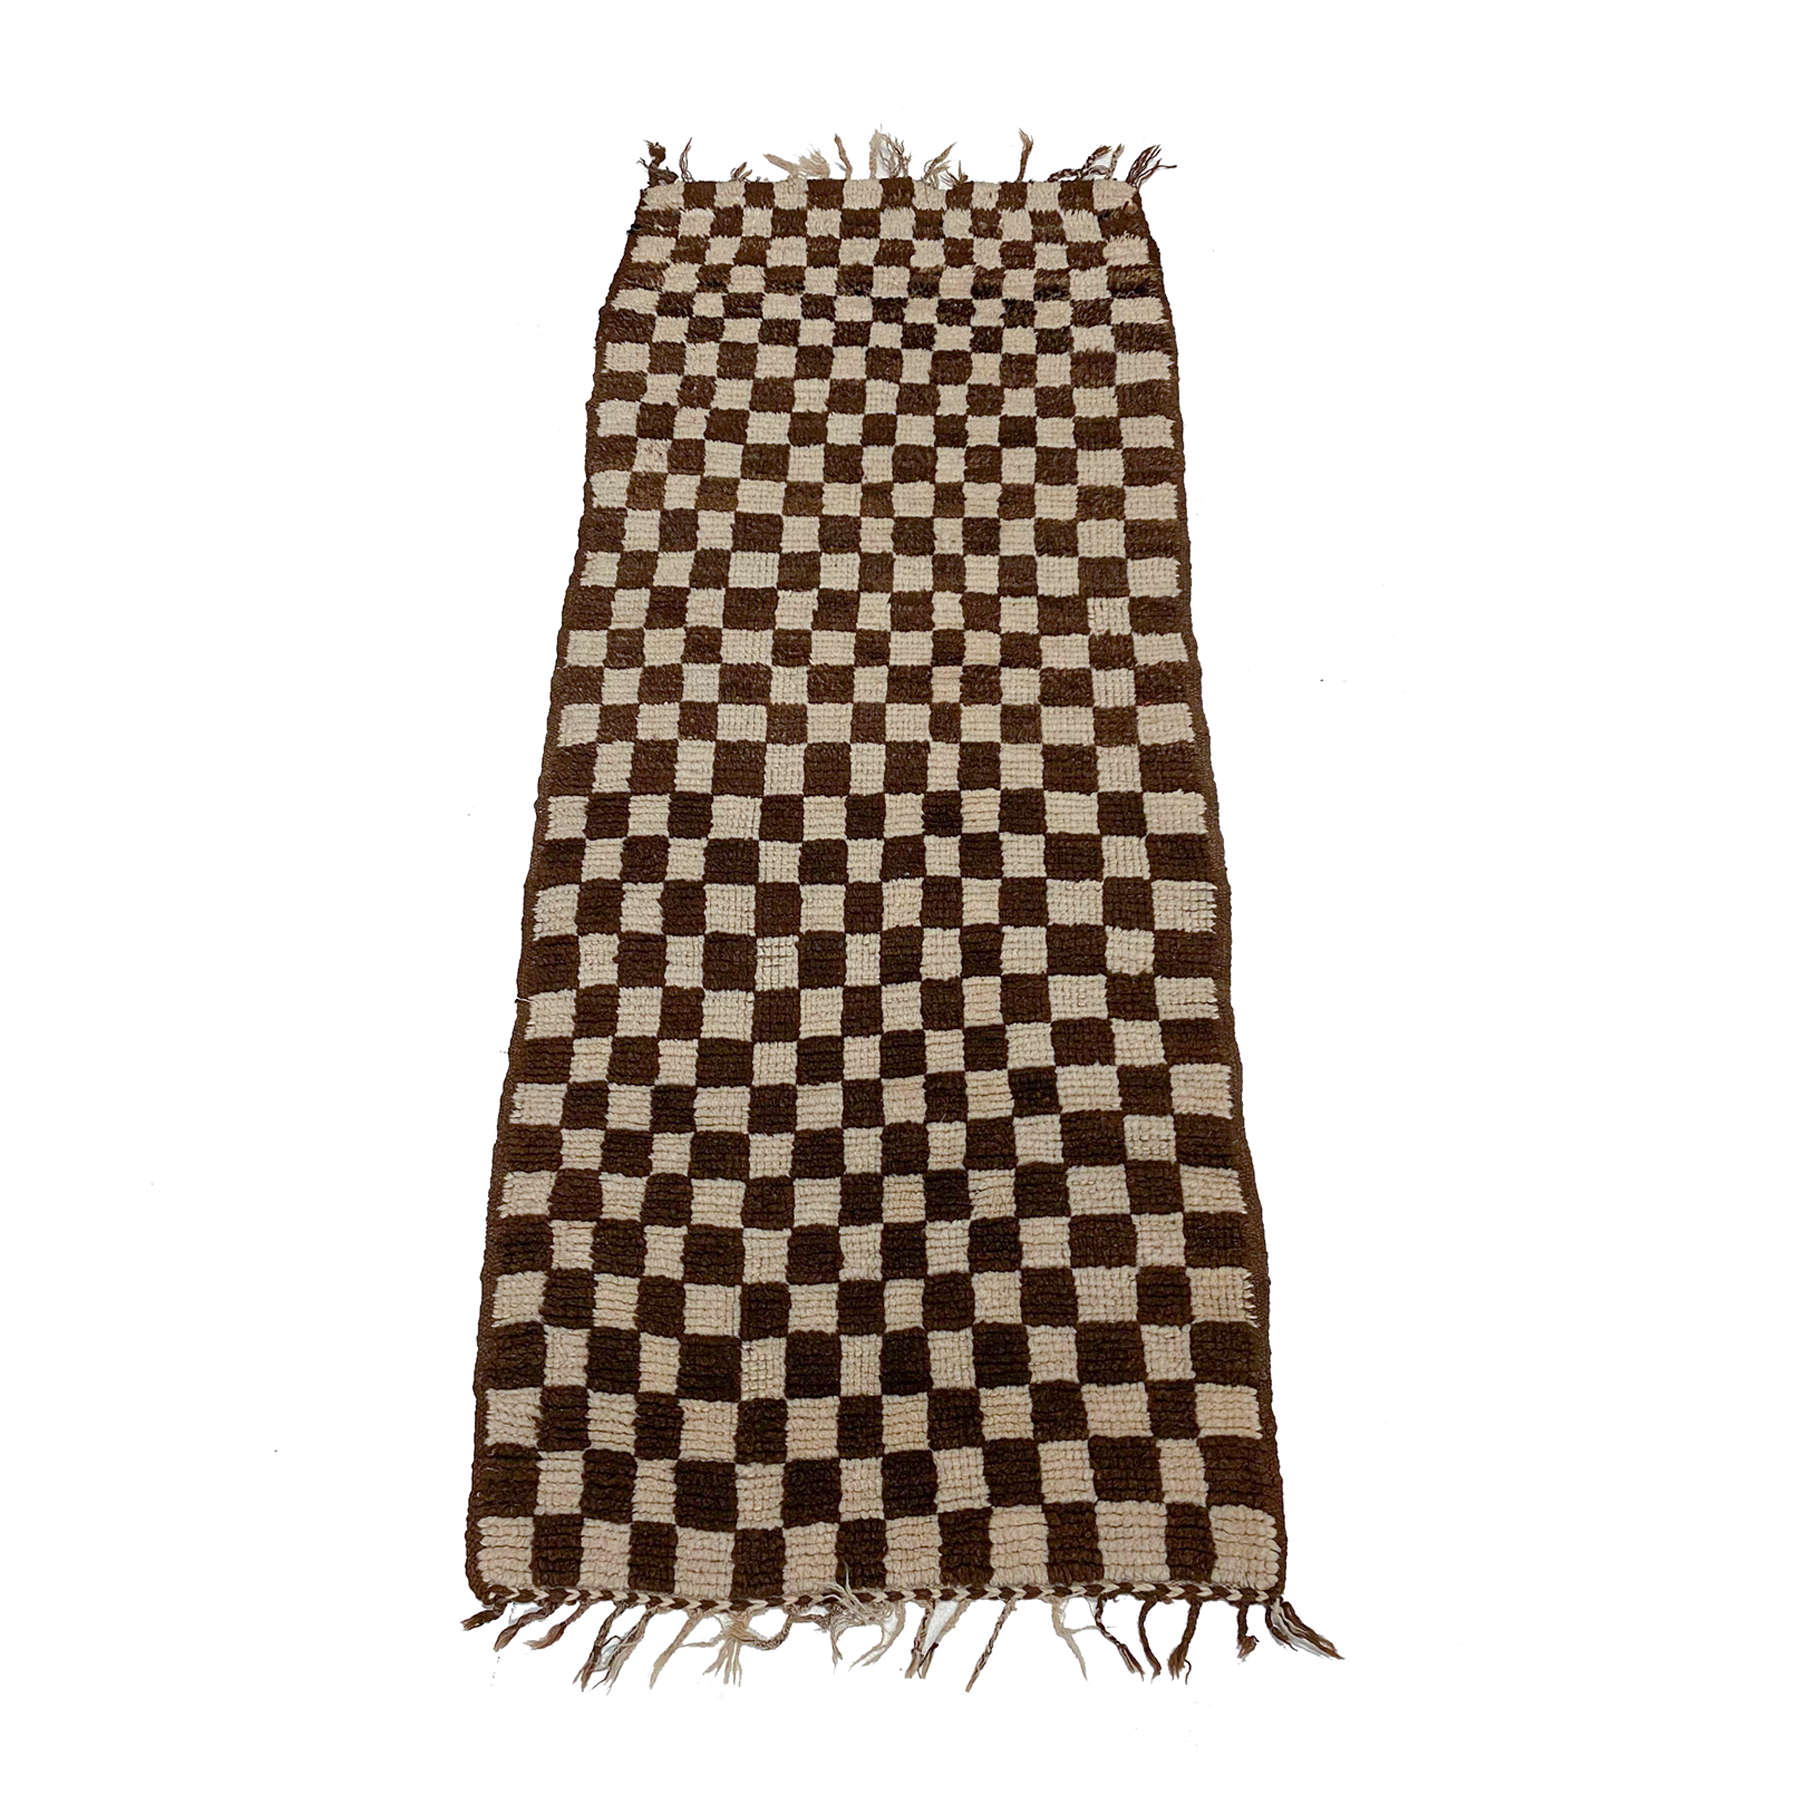 Checkerboard Moroccan boucherouite runner throw rug - Kantara | Moroccan Rugs